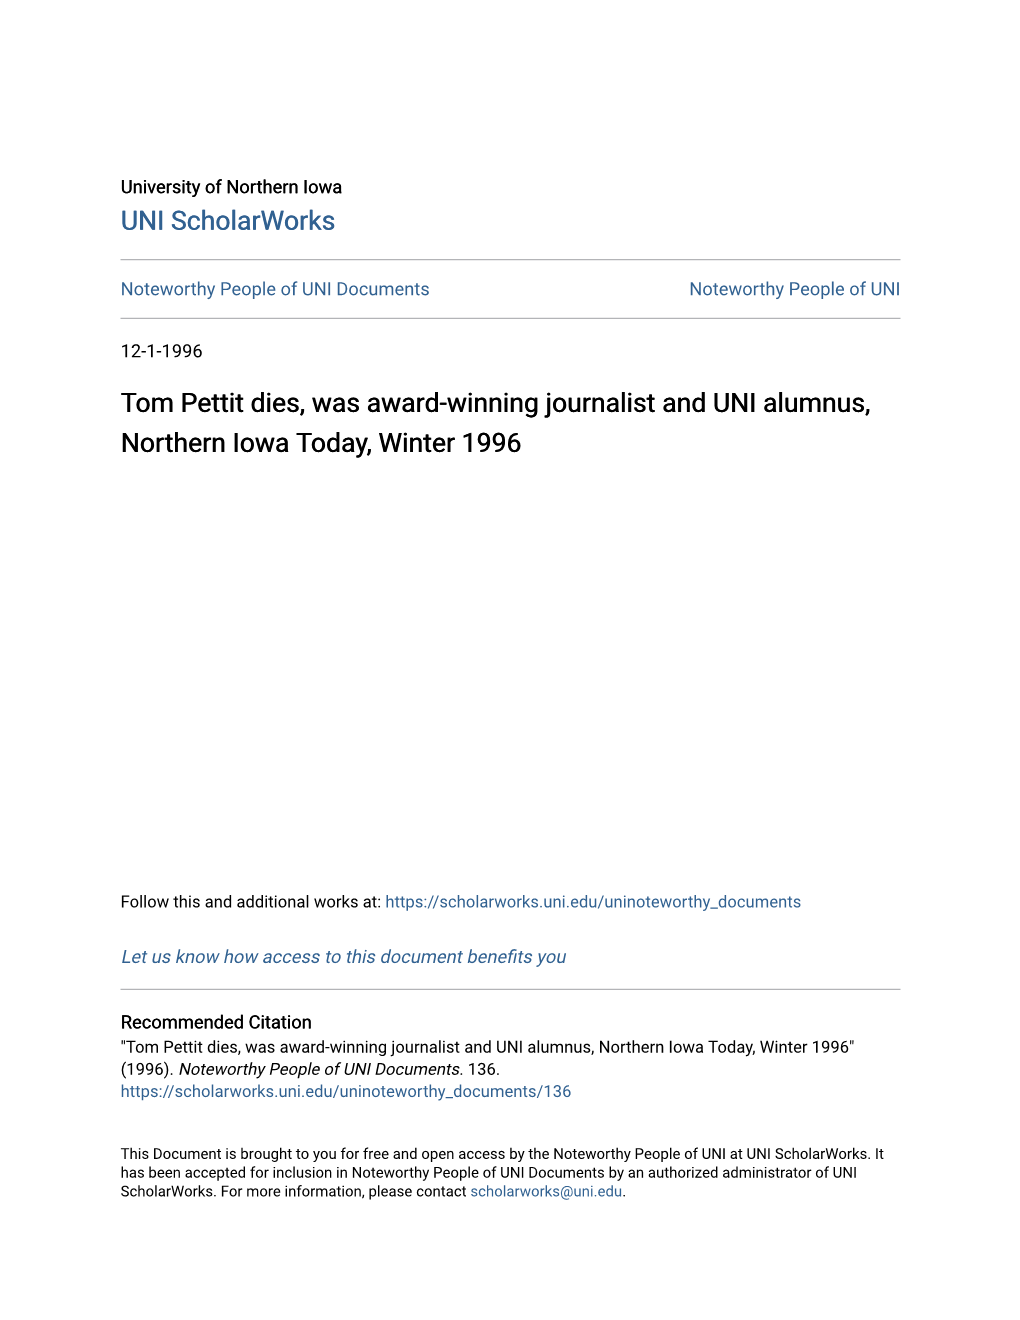 Tom Pettit Dies, Was Award-Winning Journalist and UNI Alumnus, Northern Iowa Today, Winter 1996